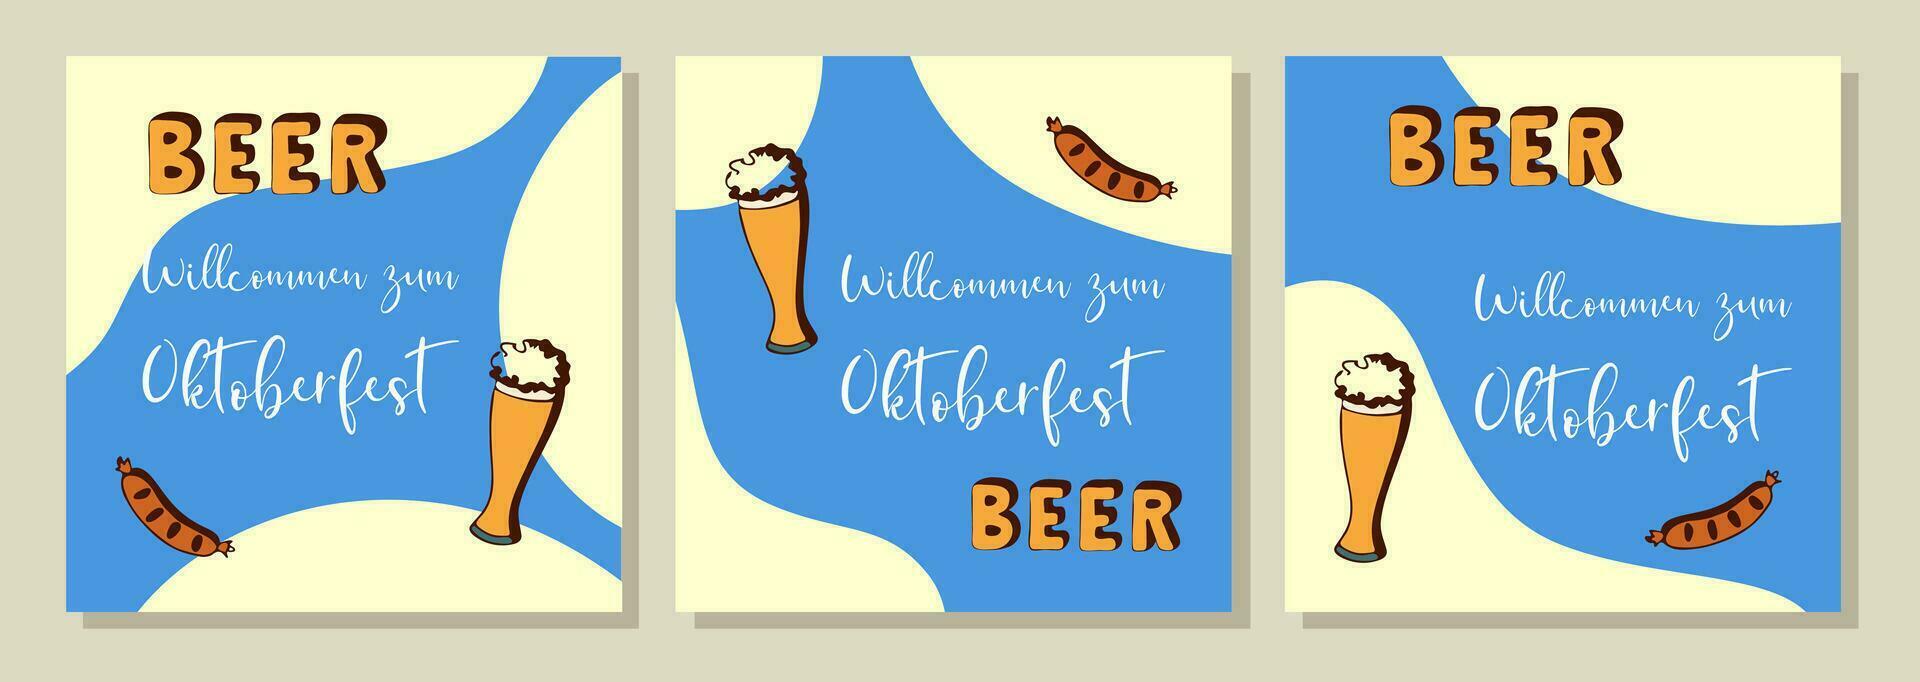 oktoberfeest. bier festival. blauw posters reeks met tekening hand- getrokken en opschrift wilcommen zum oktoberfeest. vector